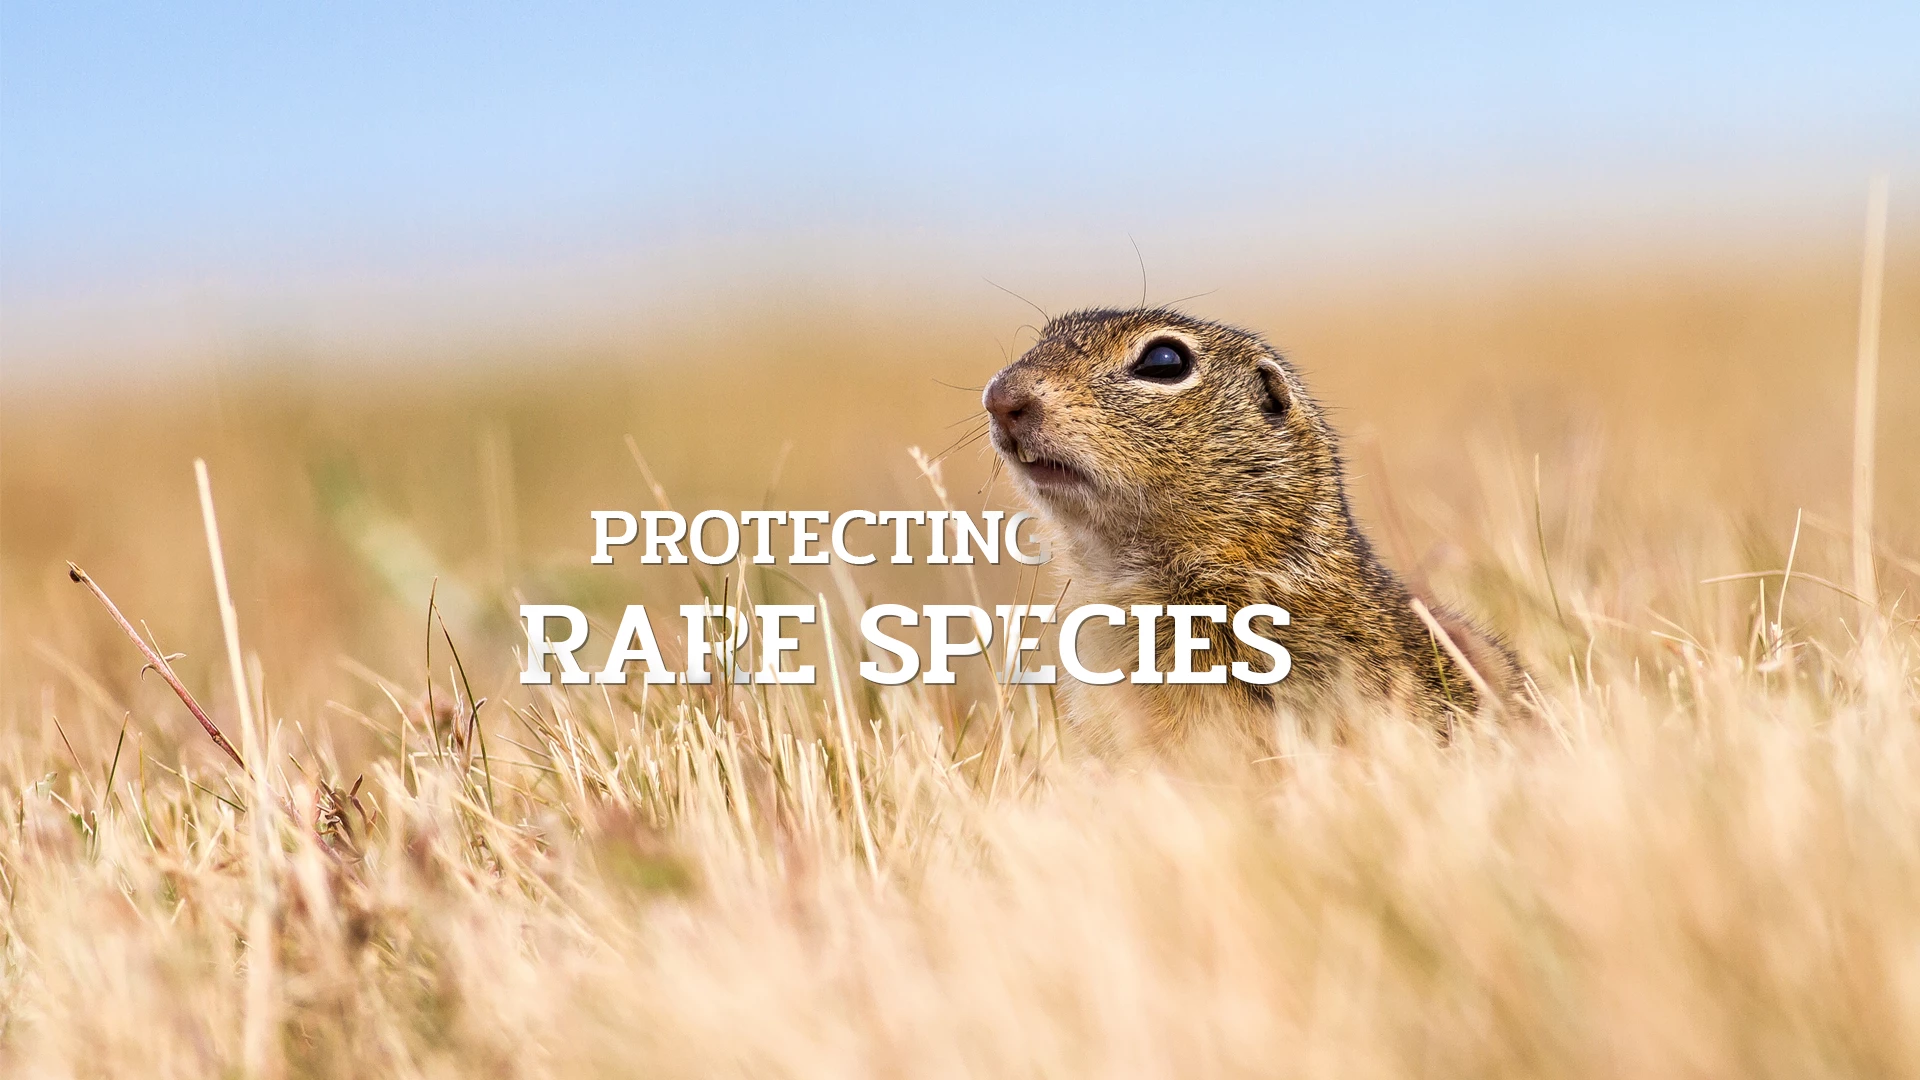 Protecting rare species